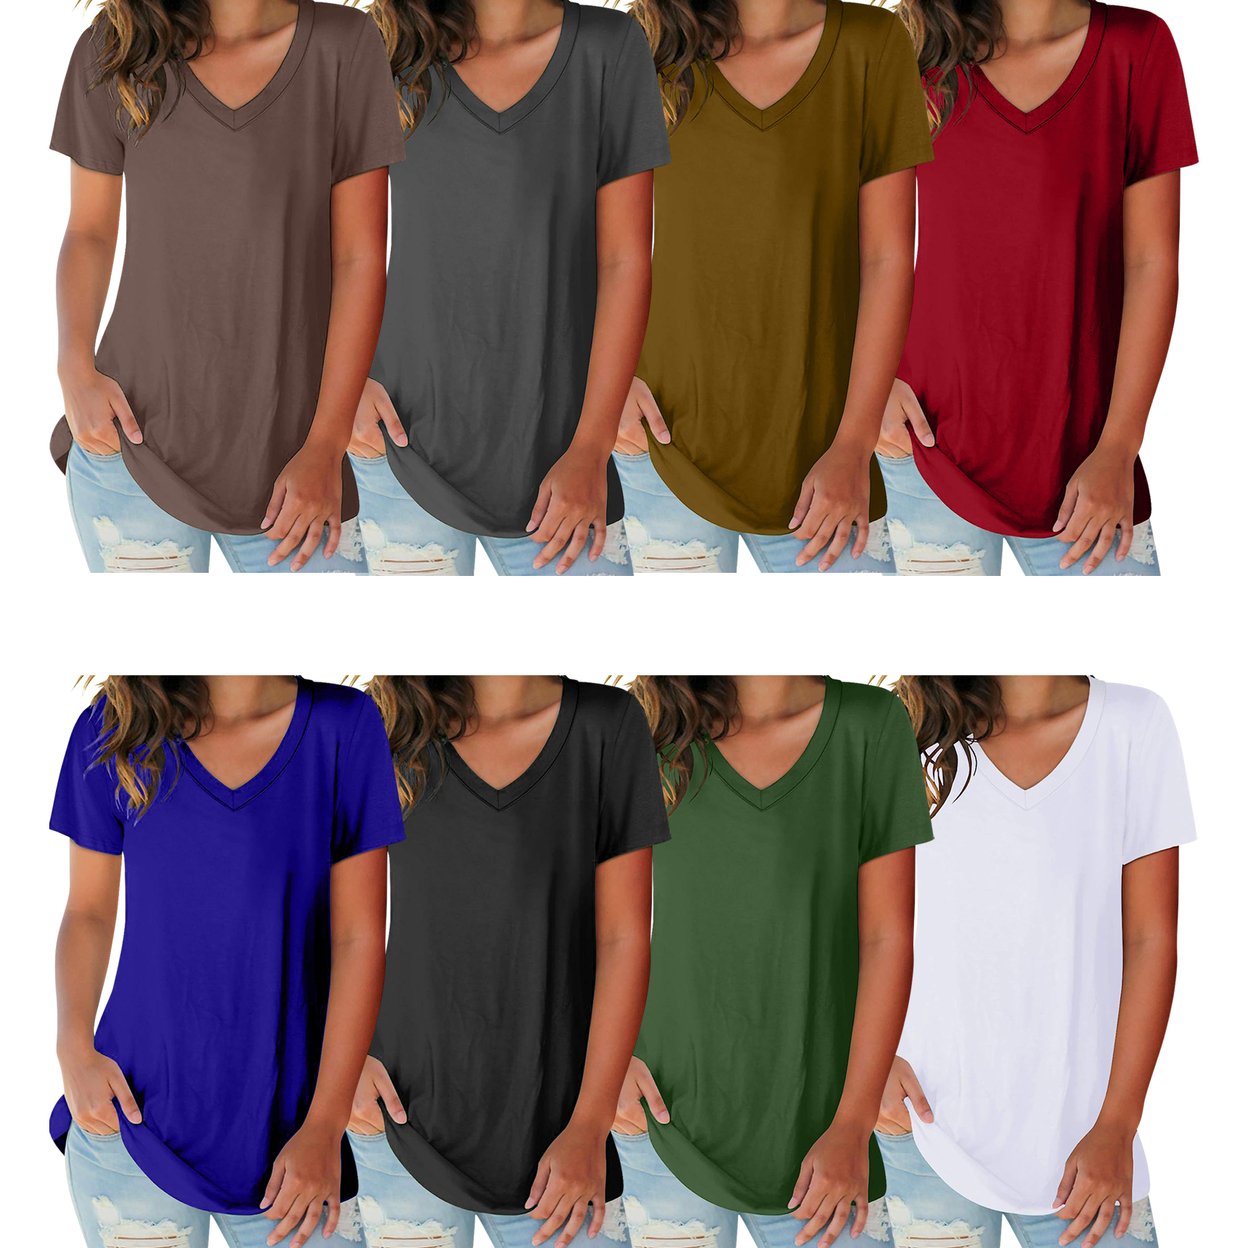 3-Pack: Women's Ultra Soft Smooth Cotton Blend Basic V-Neck Short Sleeve Shirts - Black, Navy, White, Small